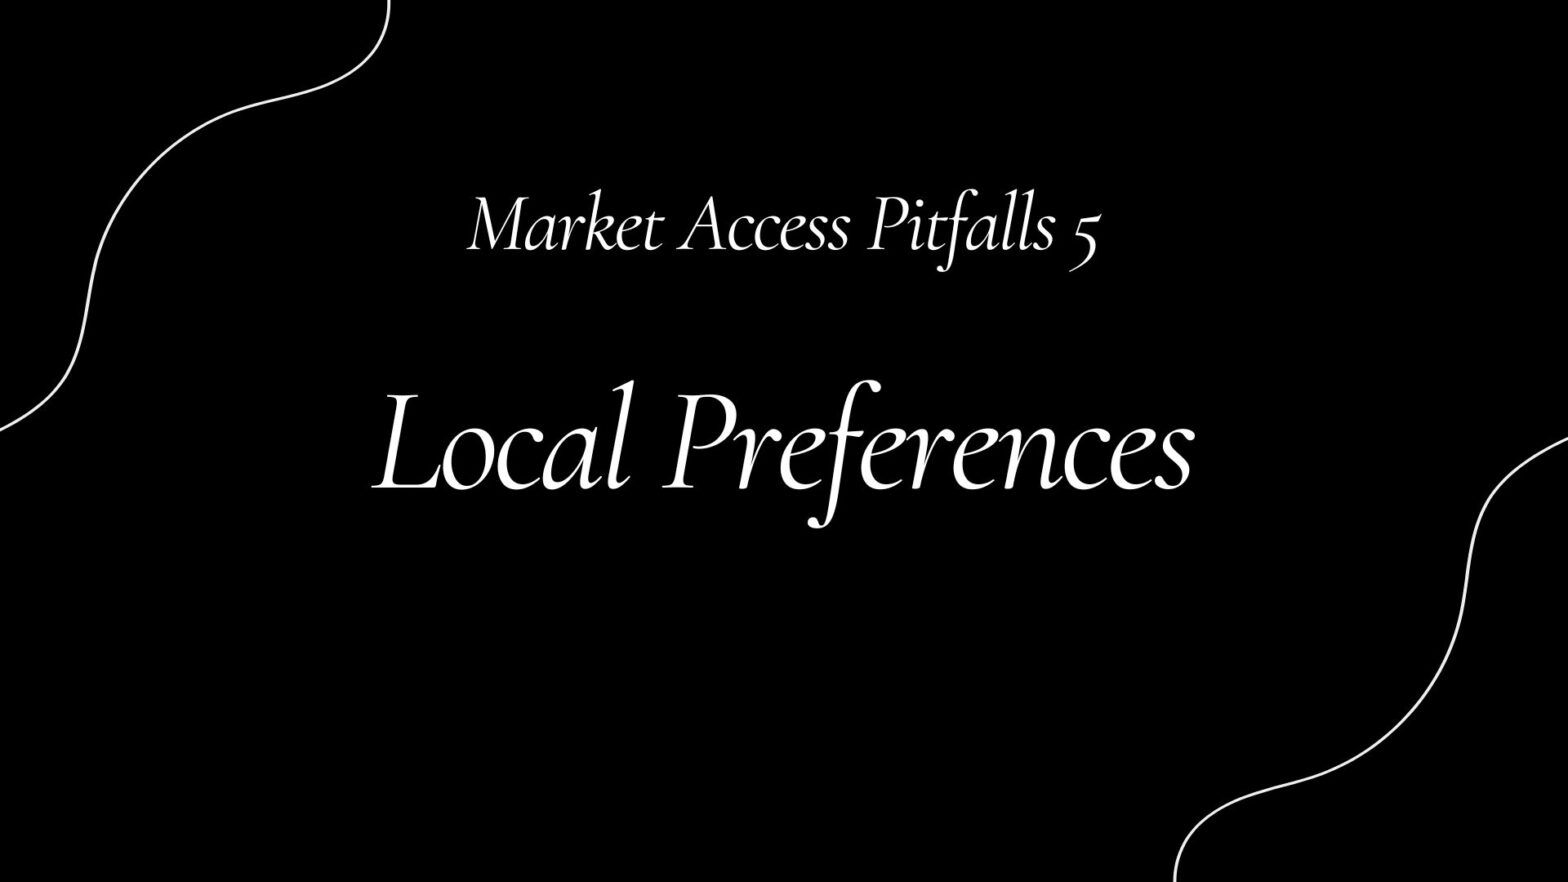 Market Access Pitfalls 5: Local Preferences